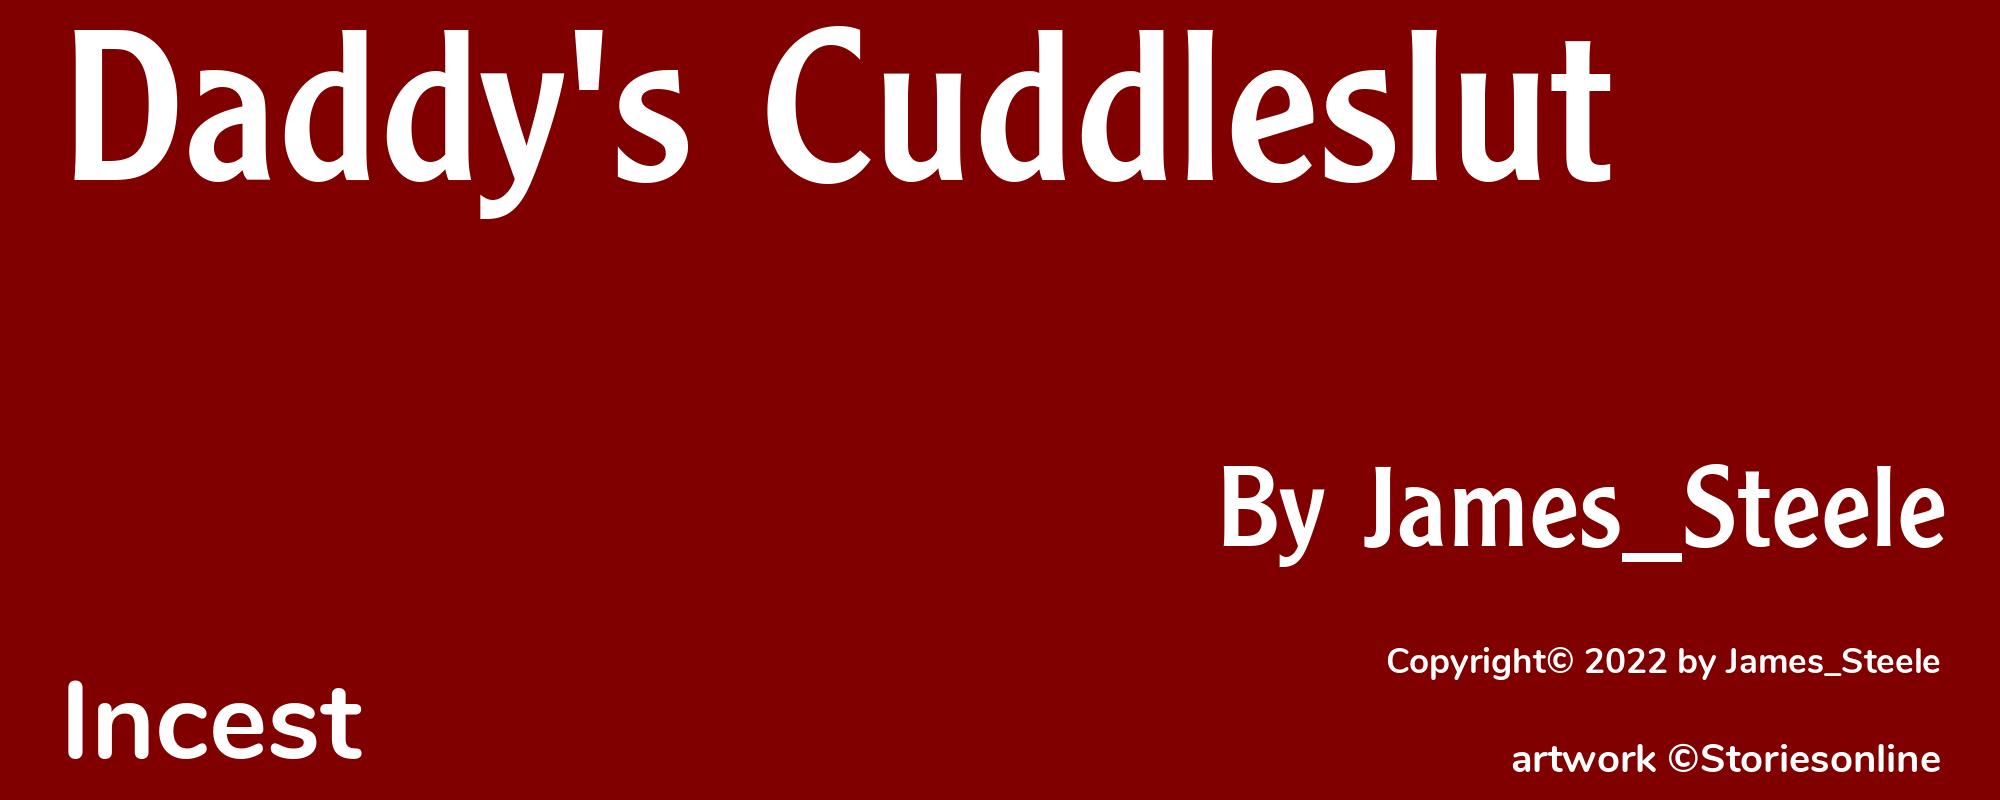 Daddy's Cuddleslut - Cover